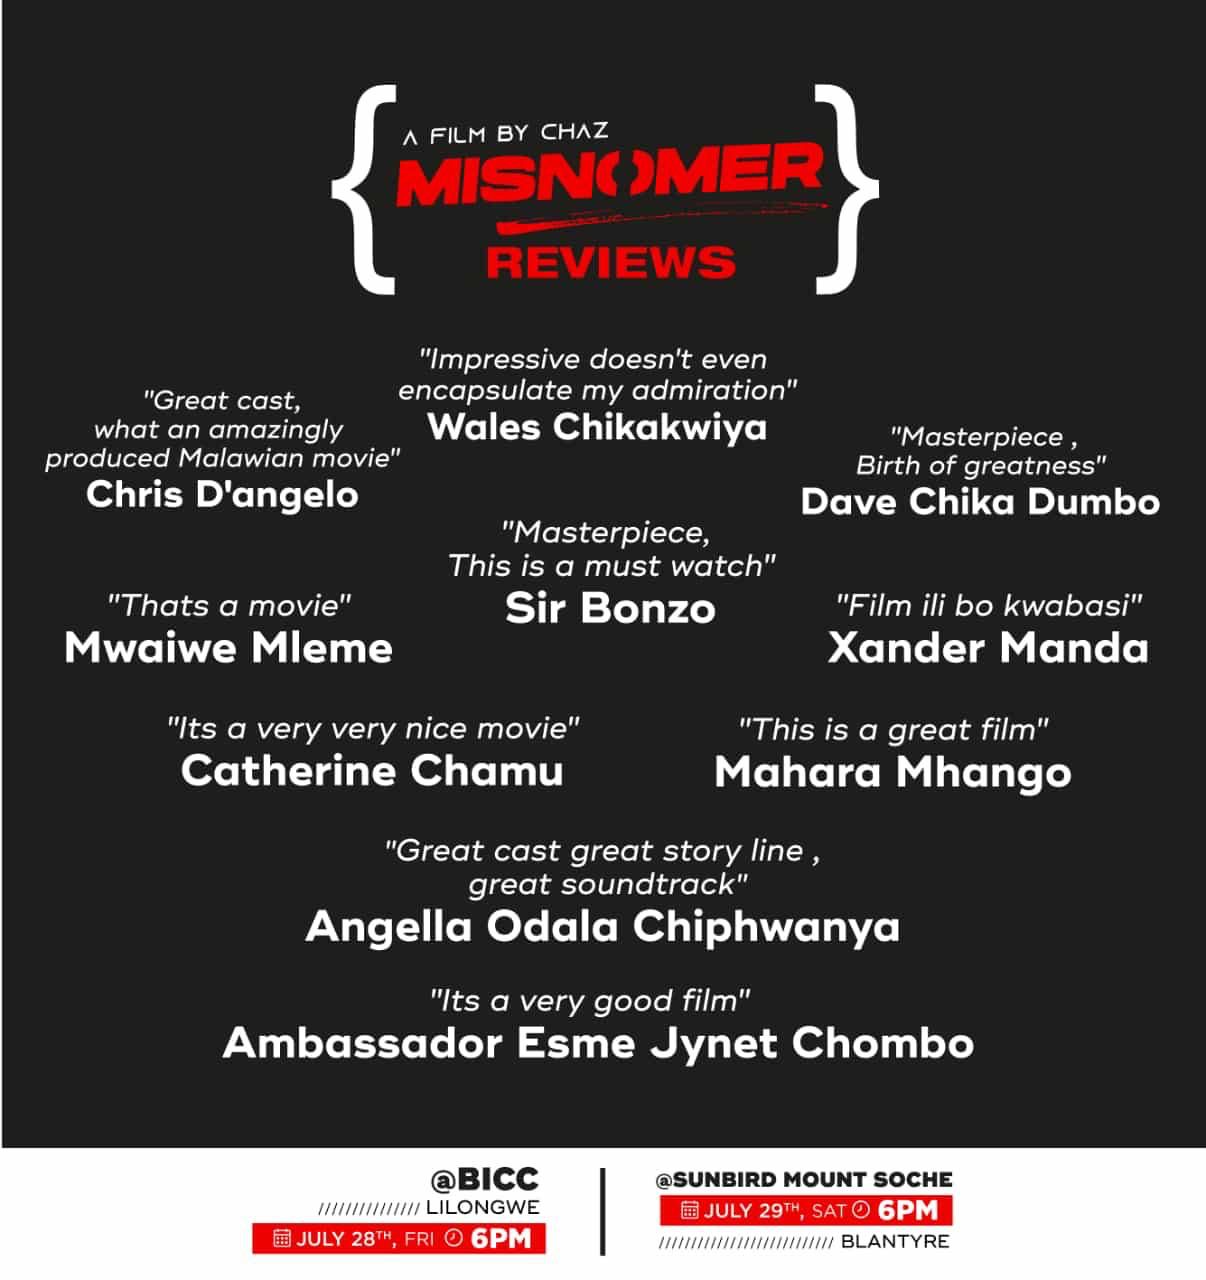 A poster of the movie mienimeir reviews